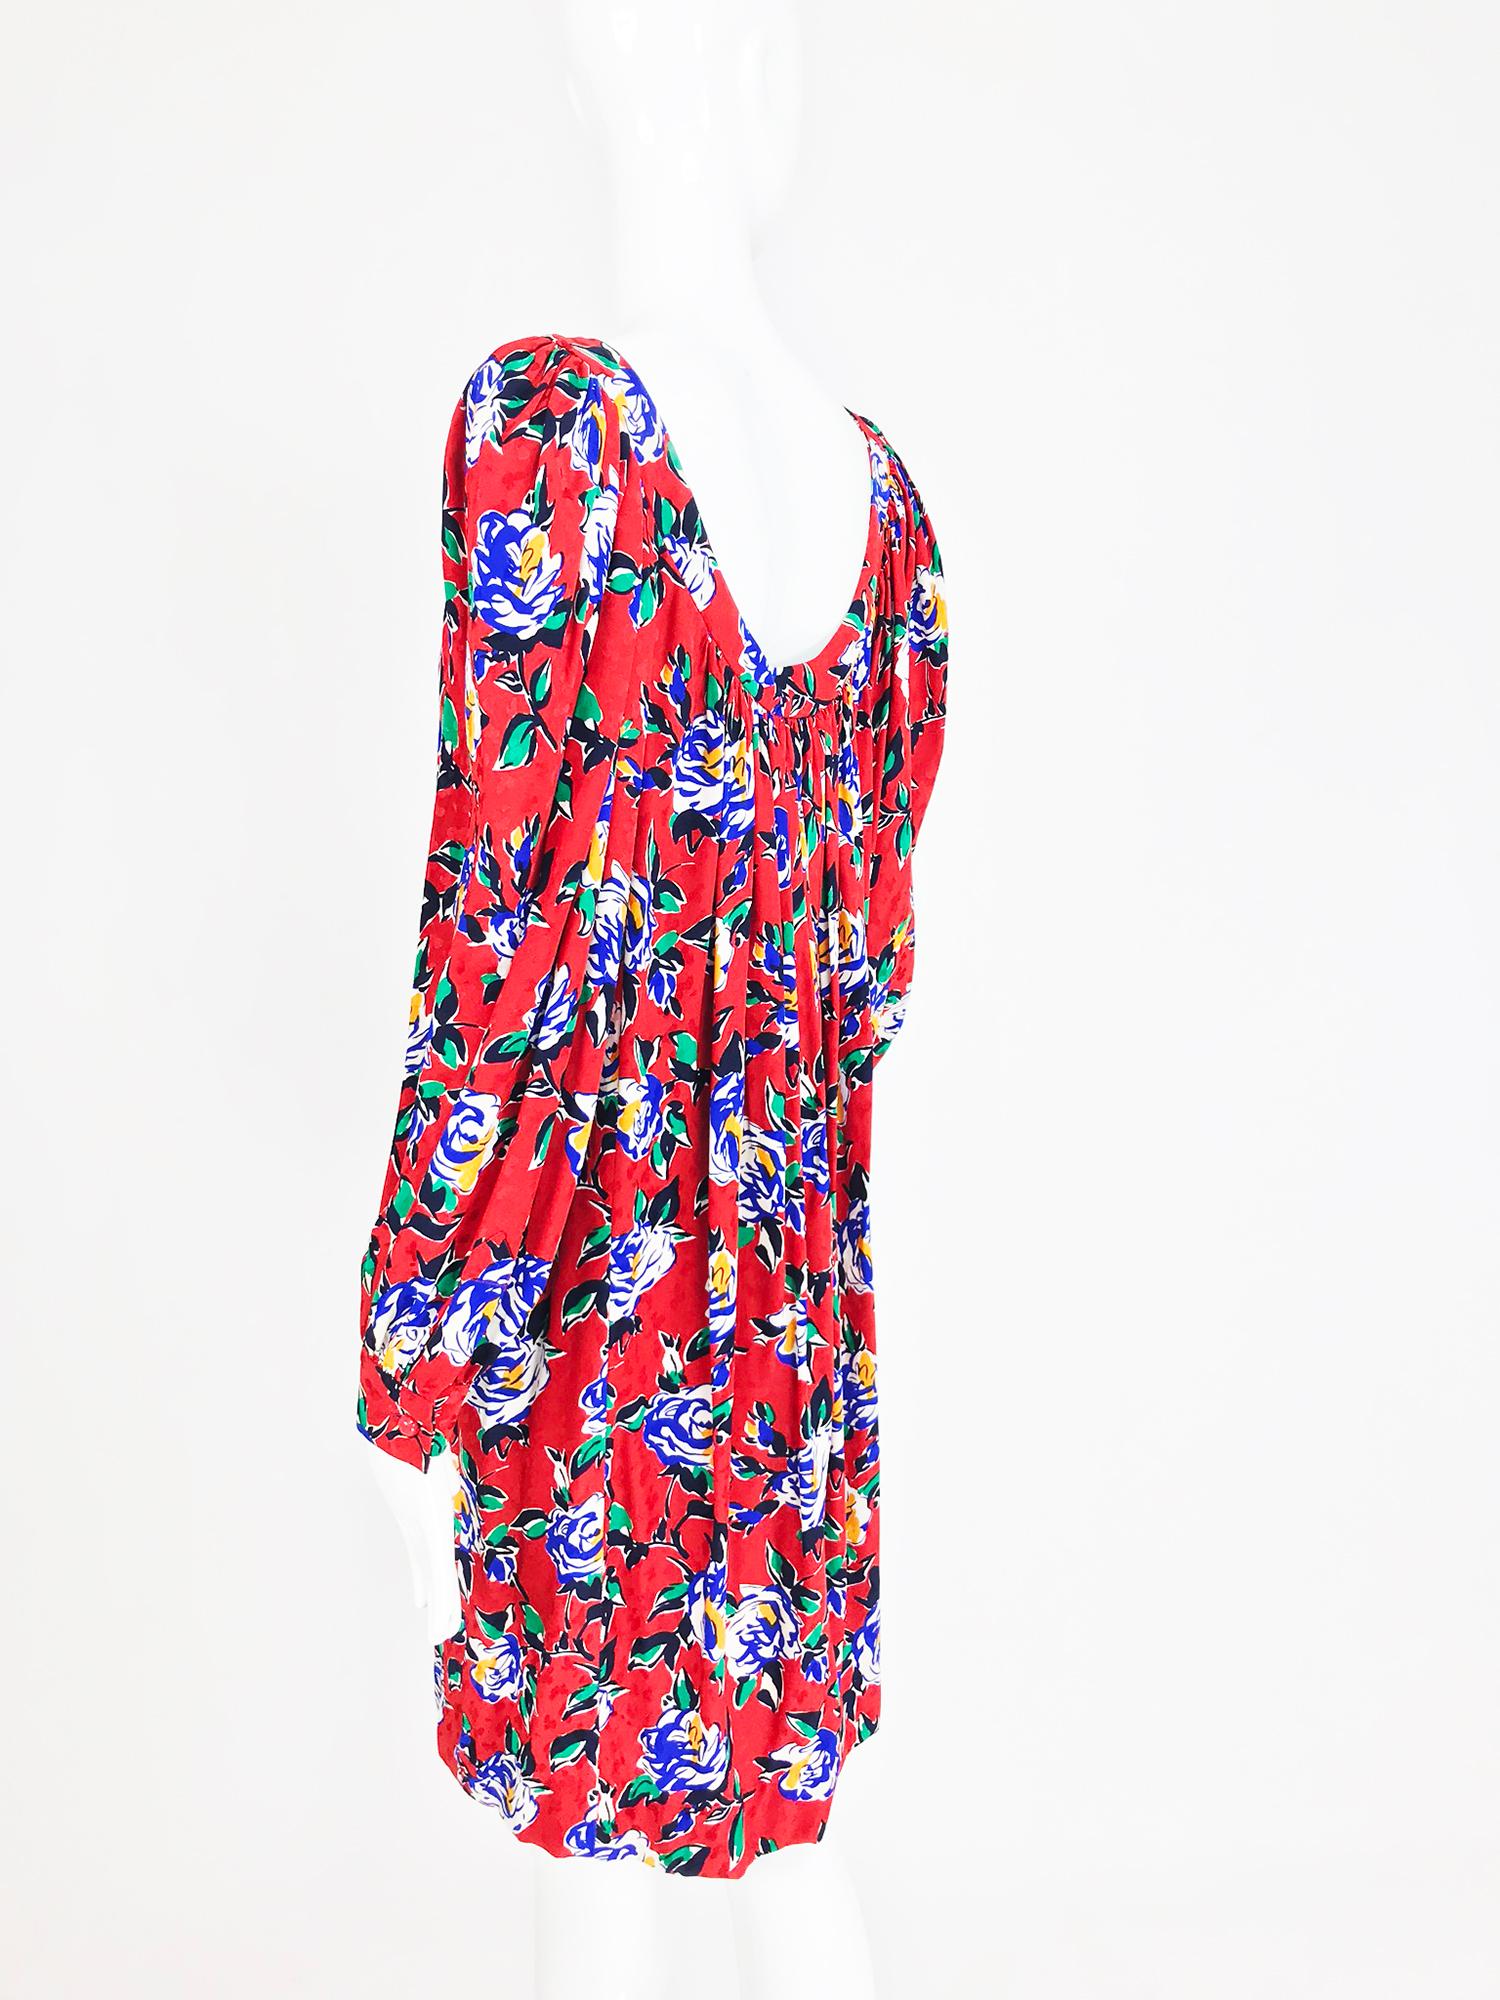 Yves Saint Laurent Red Floral Silk Jacquard Scoop Neck Dress, 1980s 1